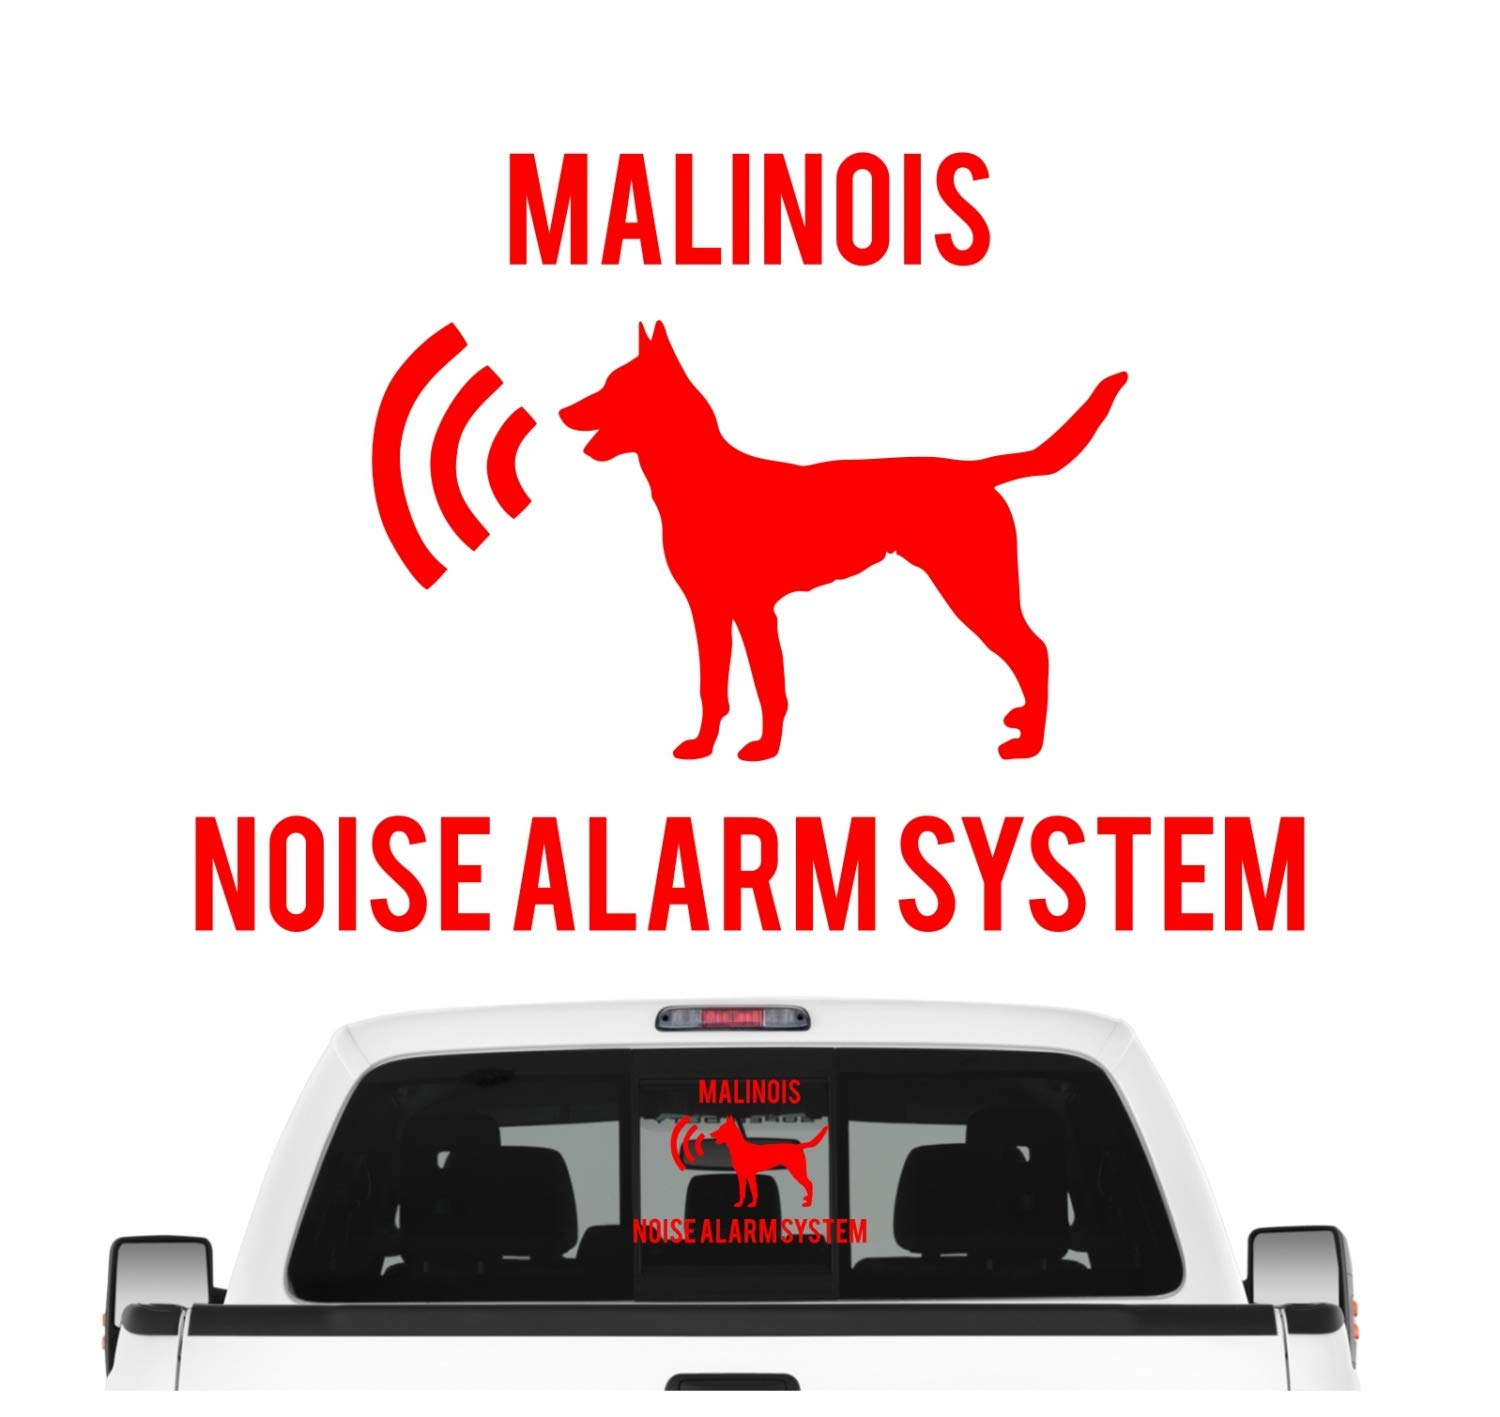 siviwonder Malinois Noise Alarmsystem Auto Aufkleber Hund Folie Belgian Mali Berger Farbe Rot, Größe 10cm von siviwonder